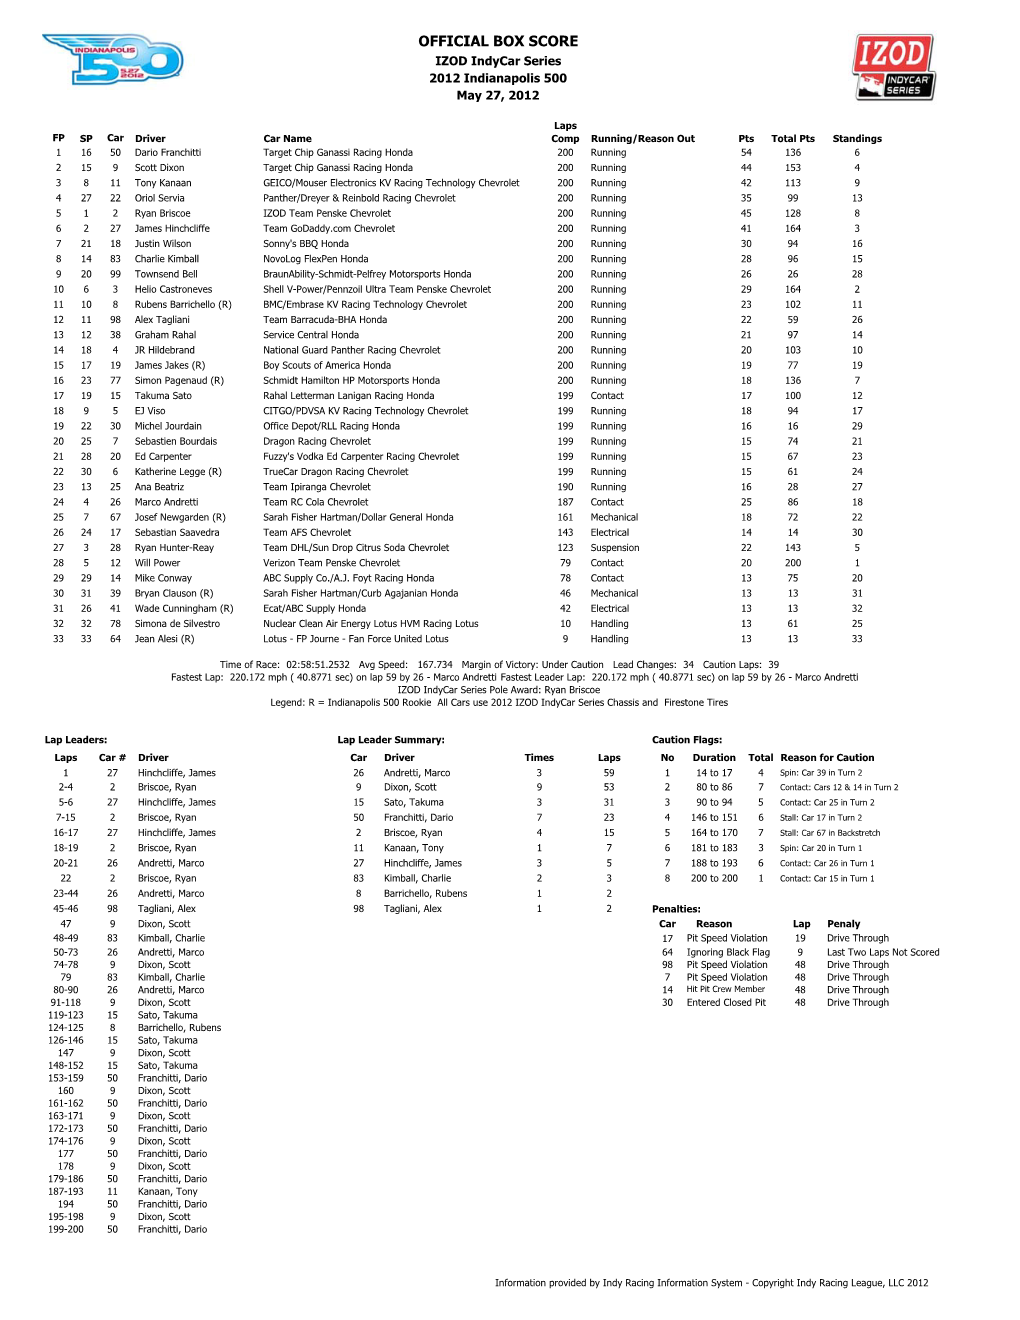 Indianapolis 500 Box Score